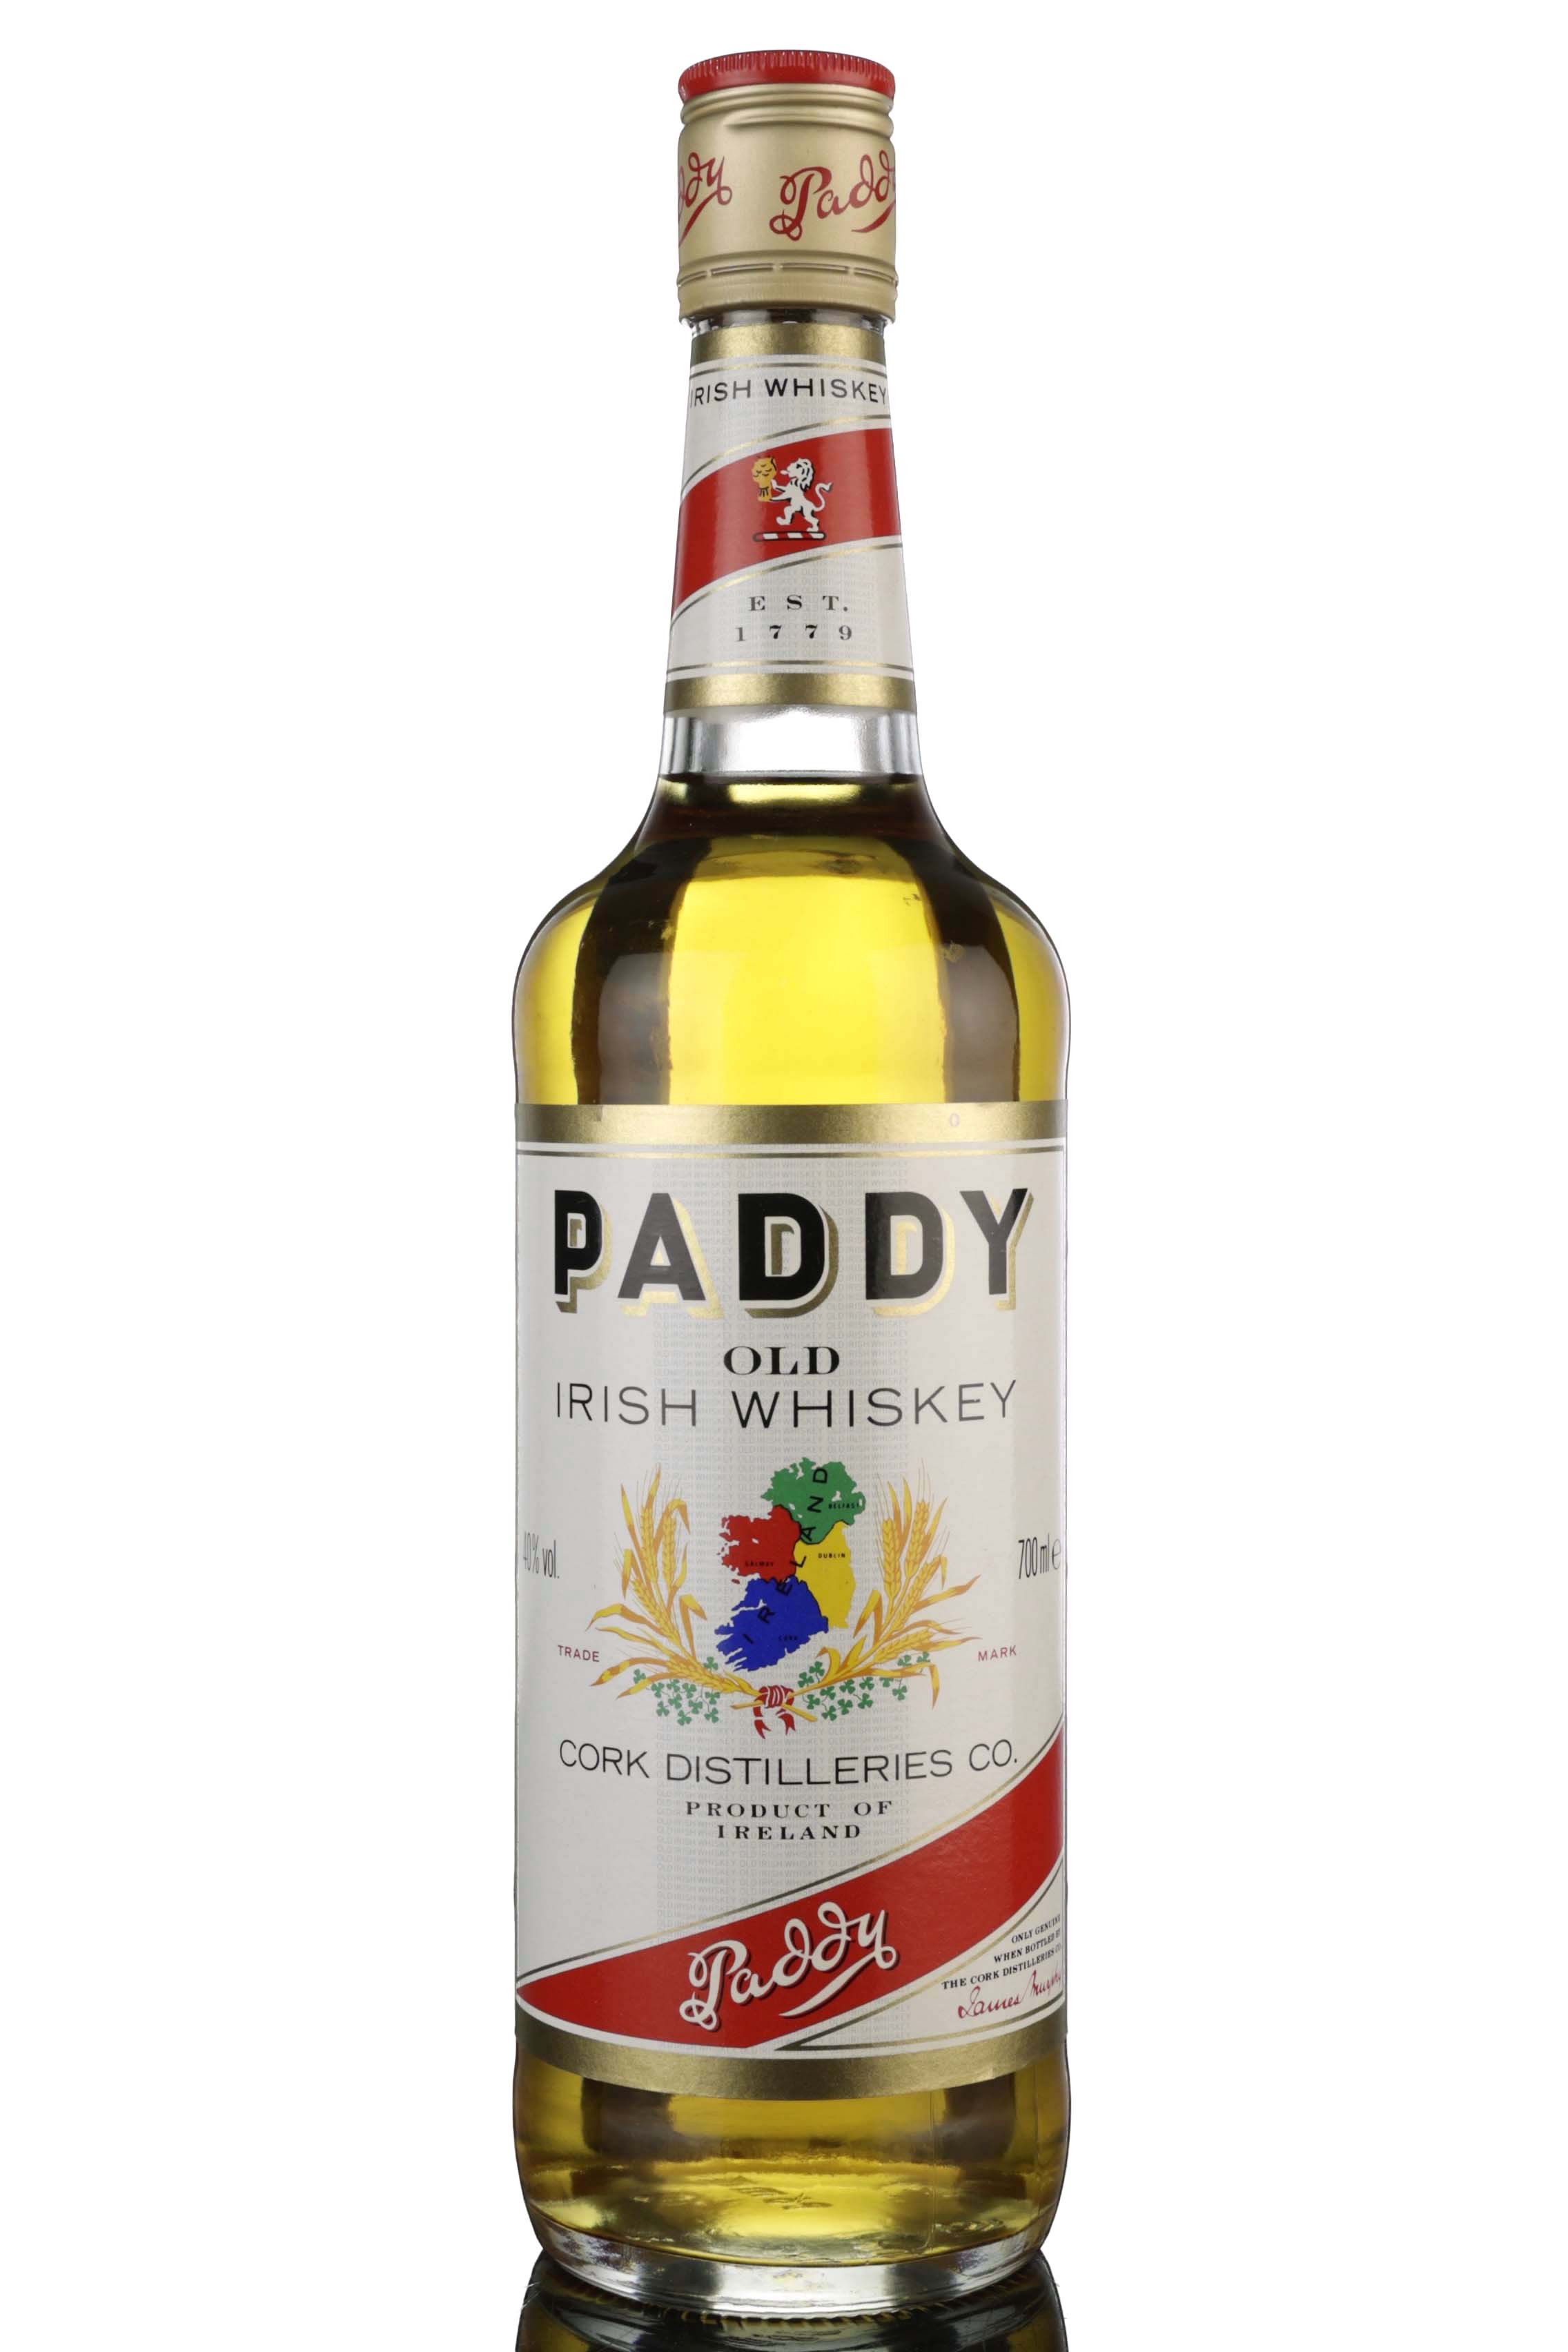 Paddy Triple Distilled - Circa 2000